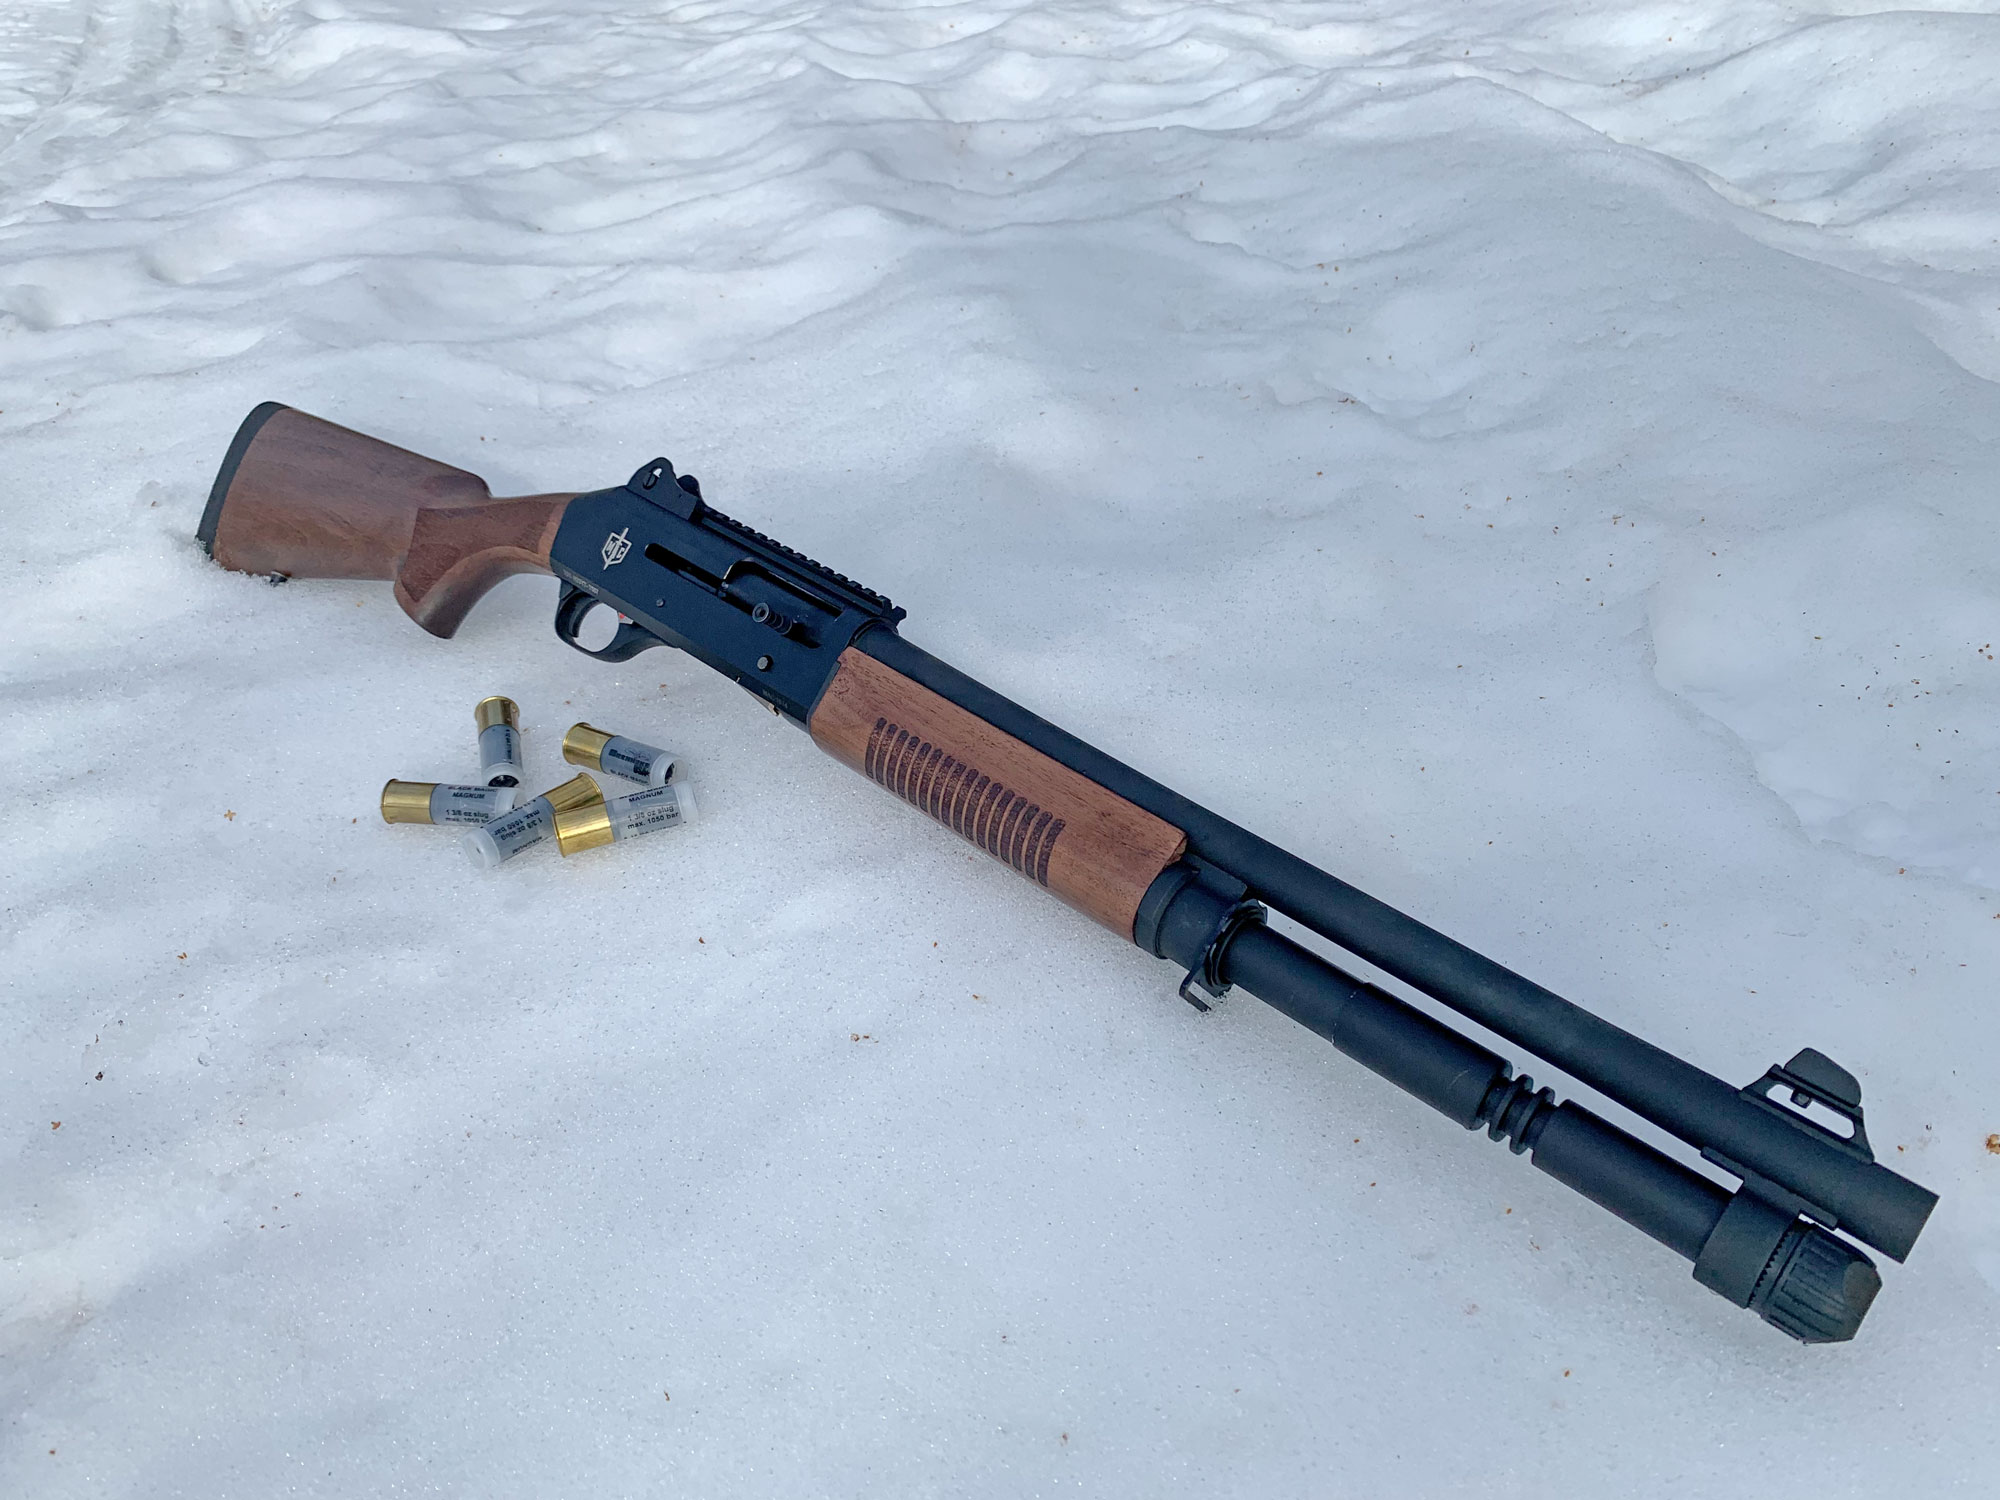 DIY Slingshot - Very Accurate Slingshot Fishing Gun Made of Scrap Wood 